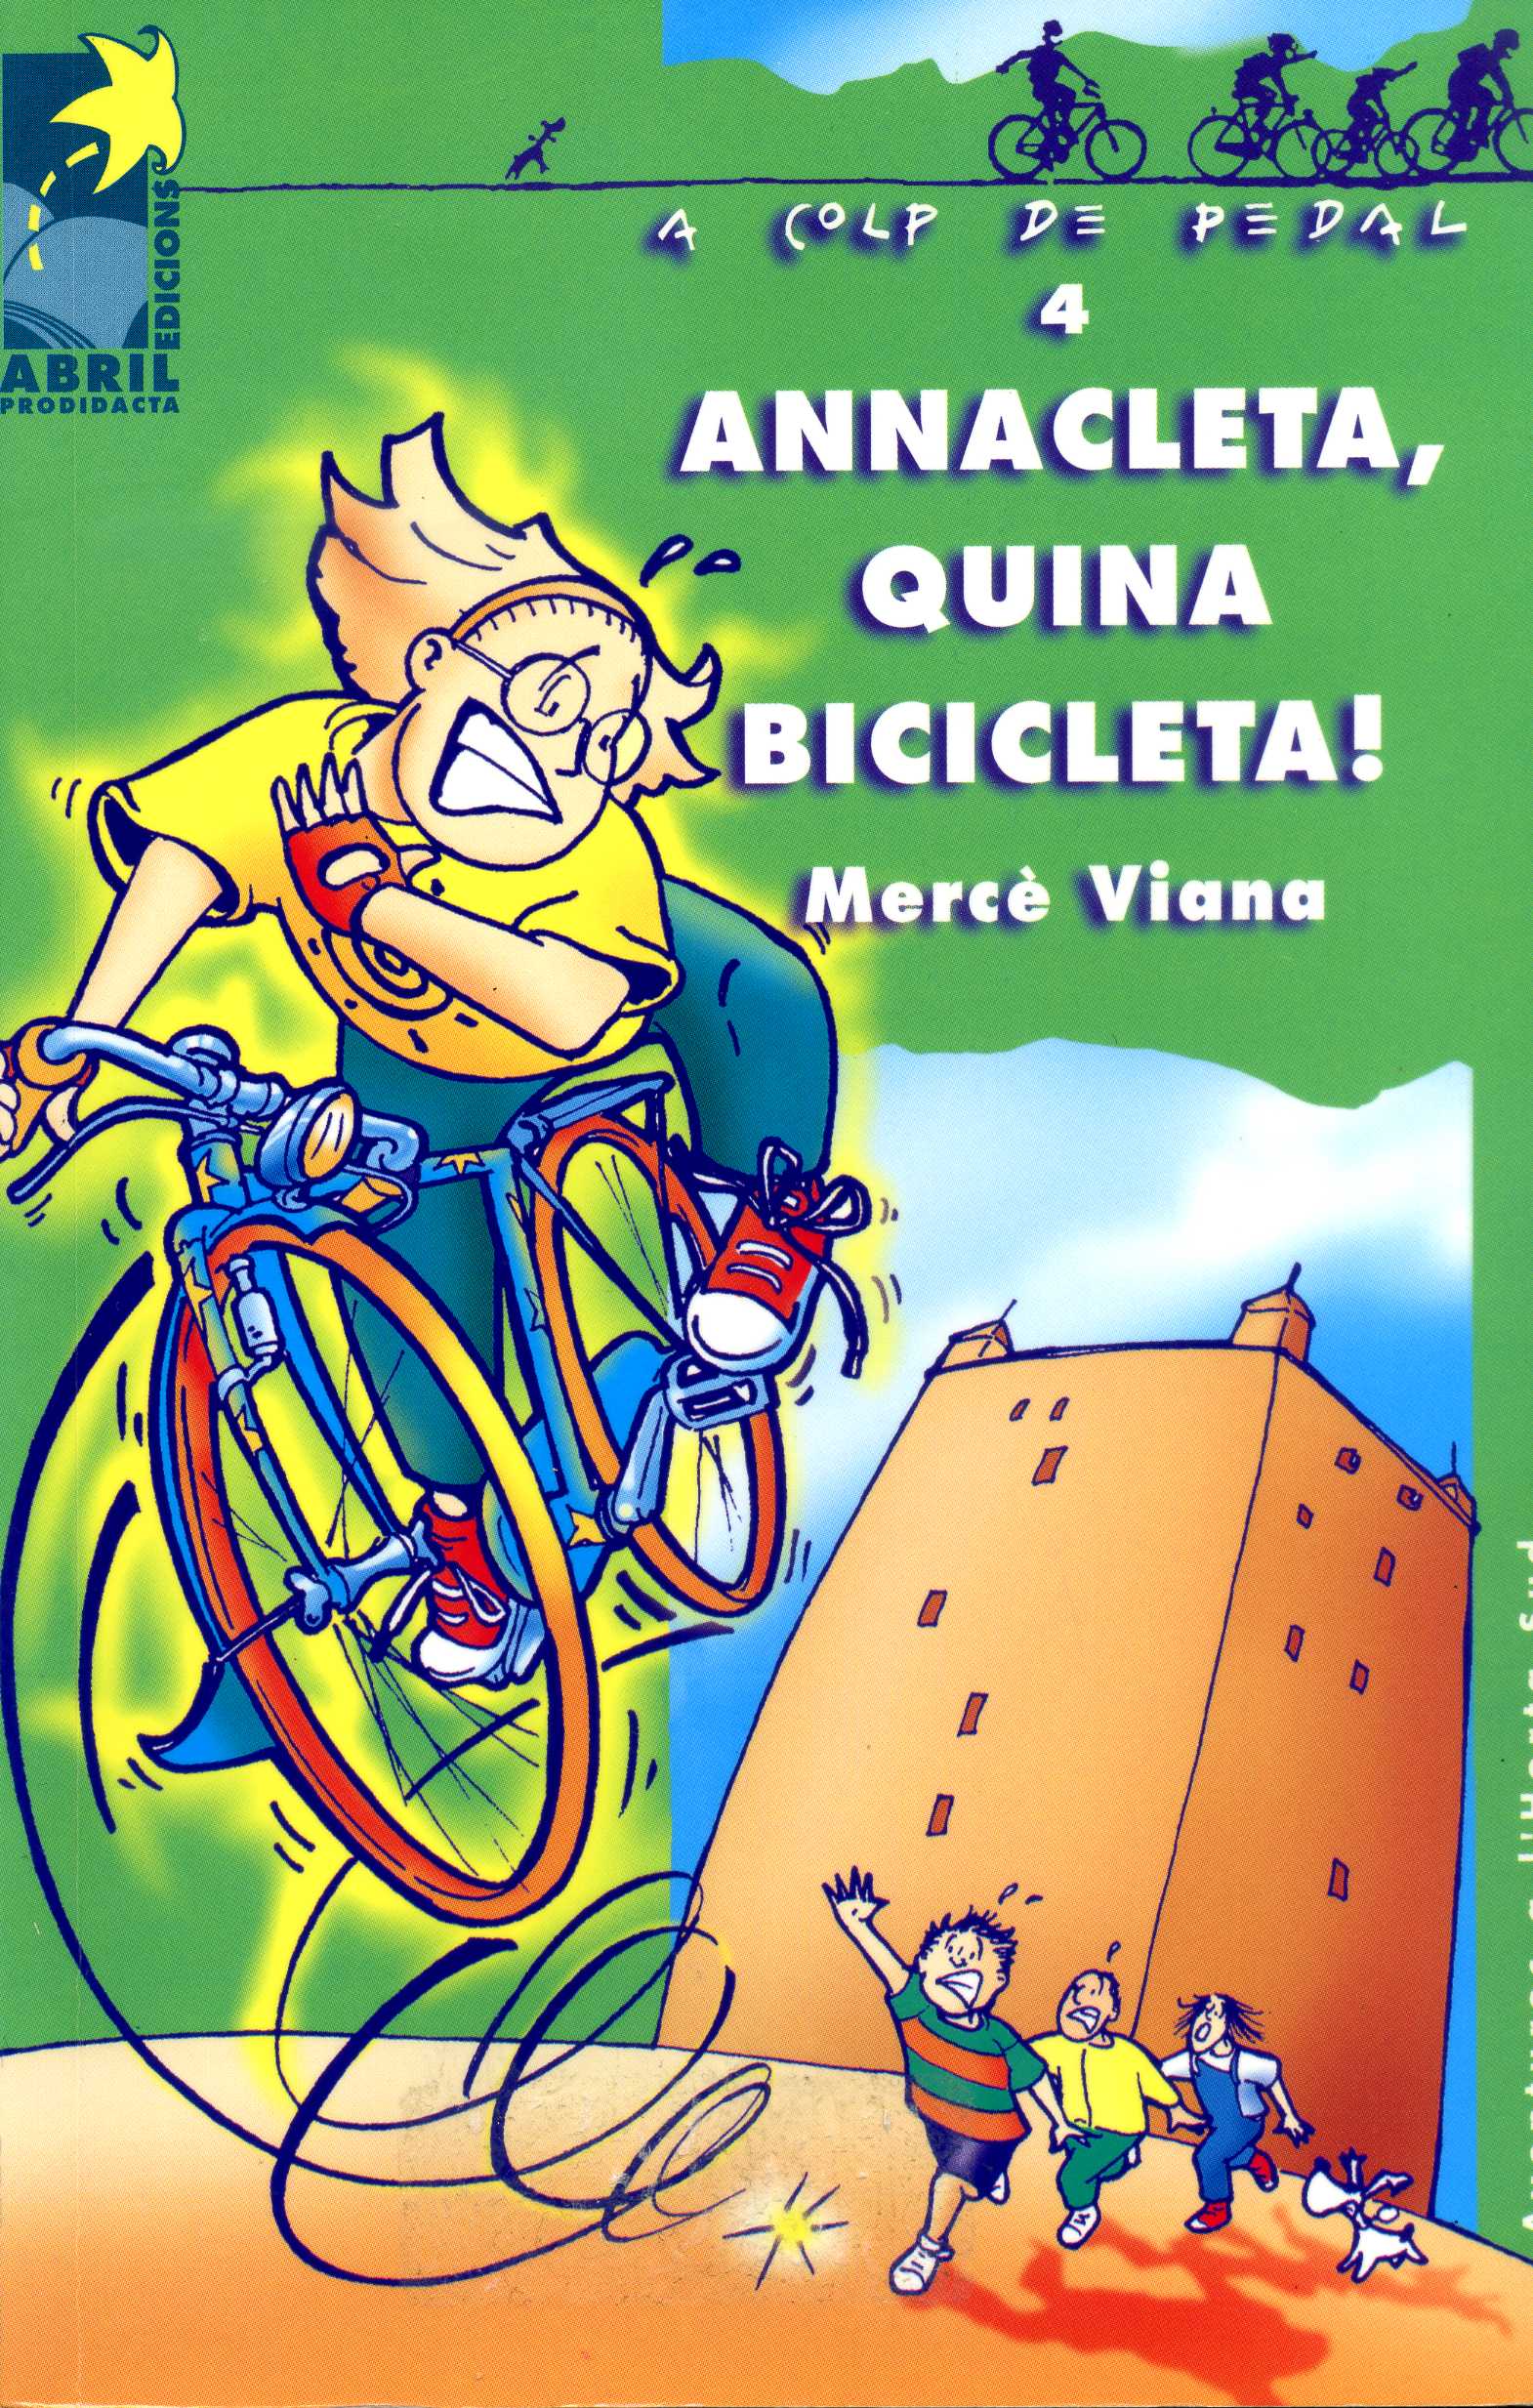 Annacleta, quina bicicleta!